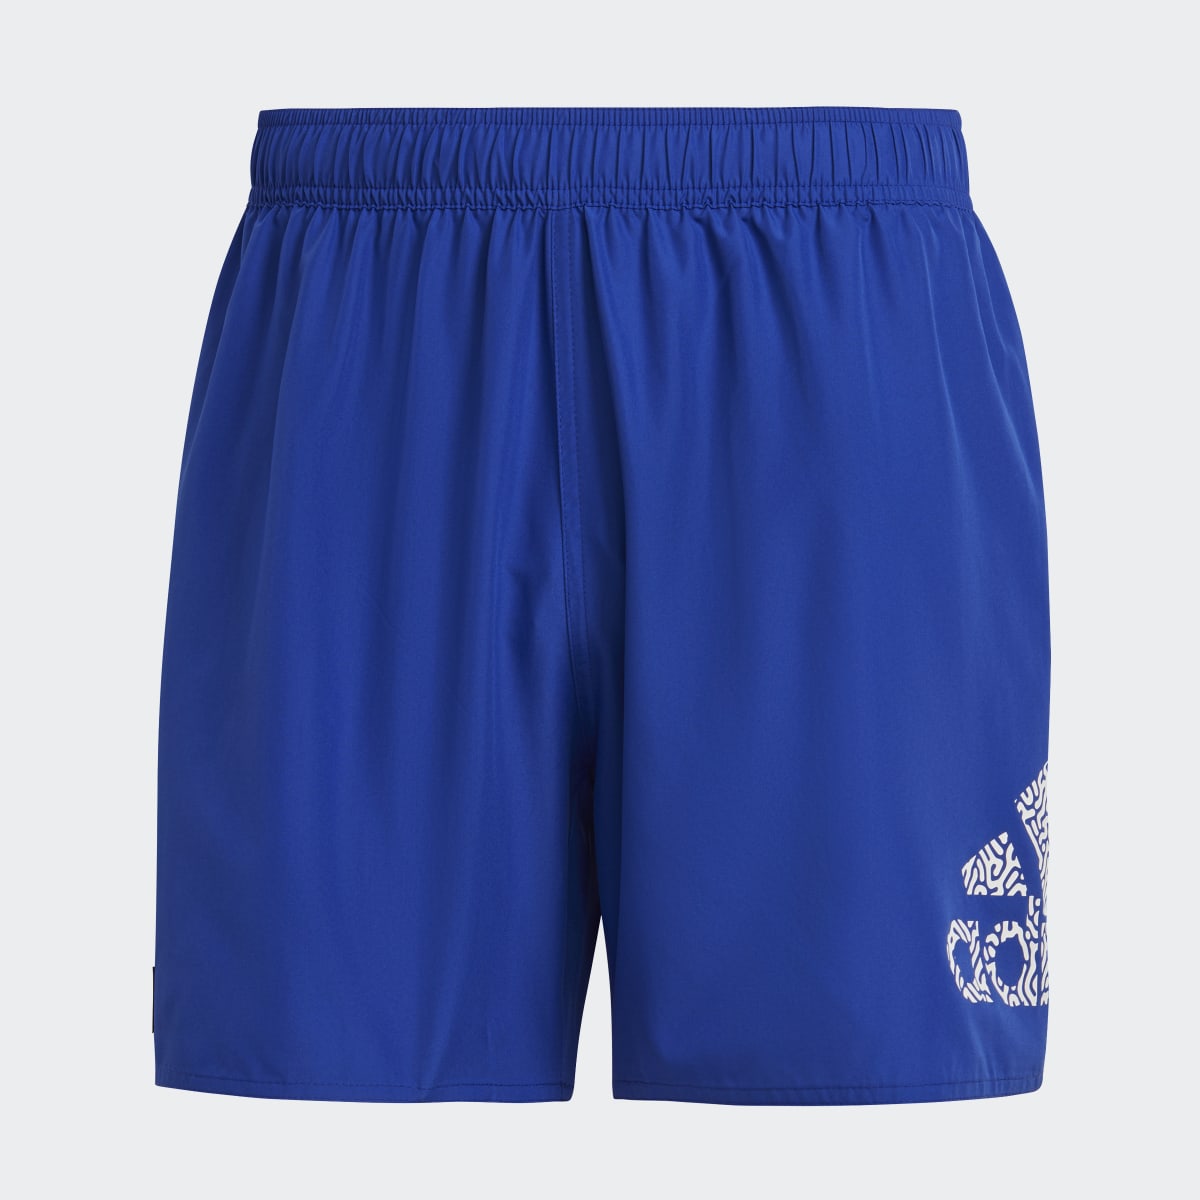 Adidas CLX Short Length Swim Shorts. 4